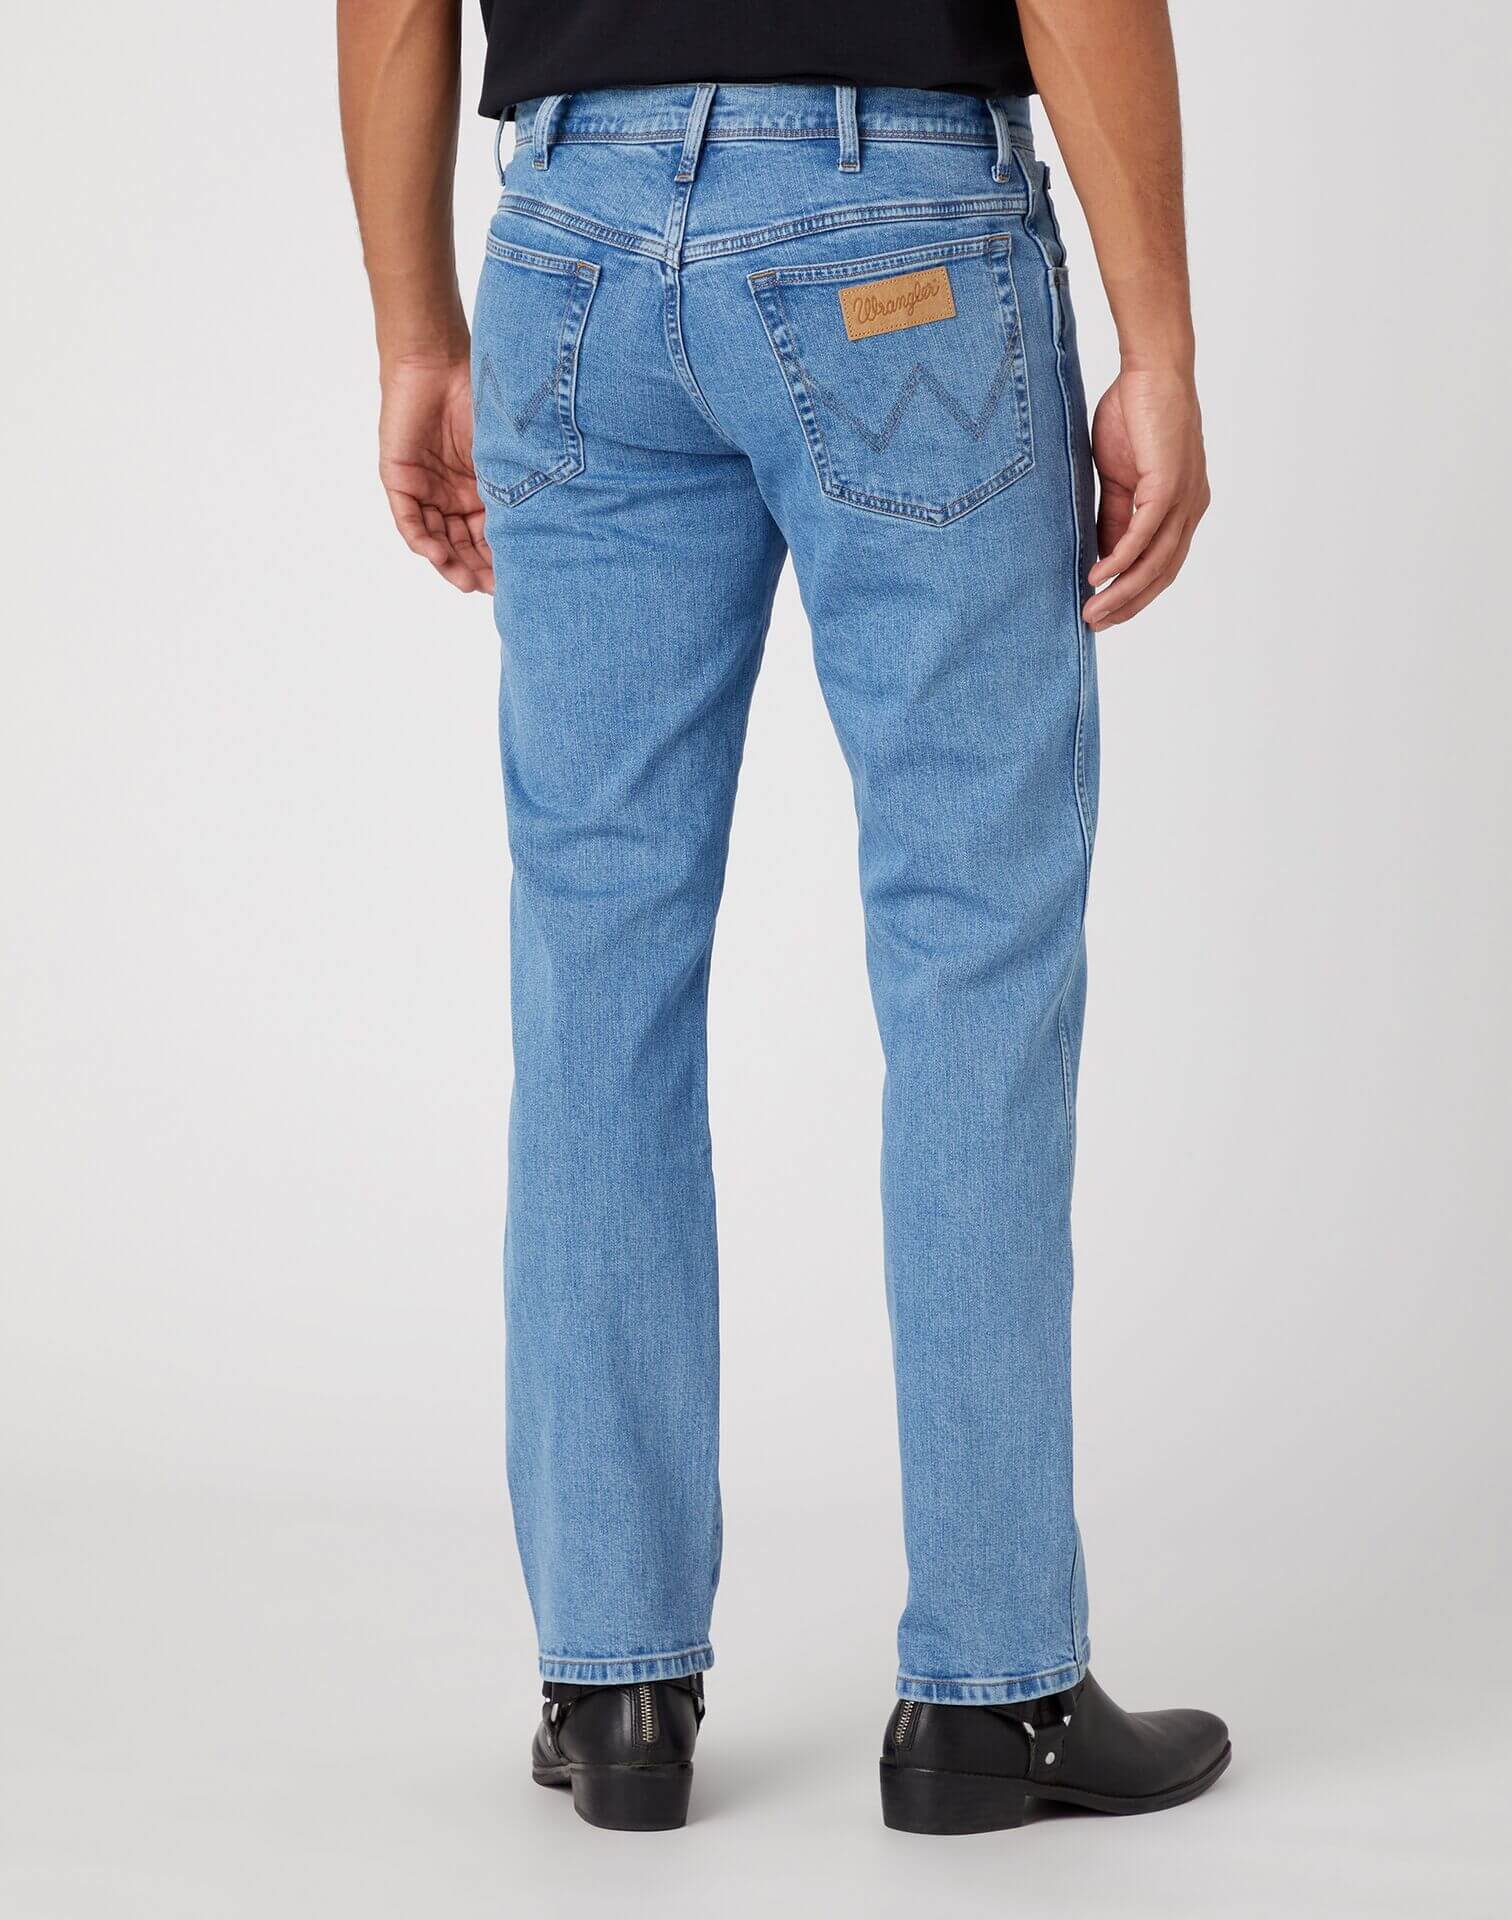 men.jeans .texas .w121hrz93 2